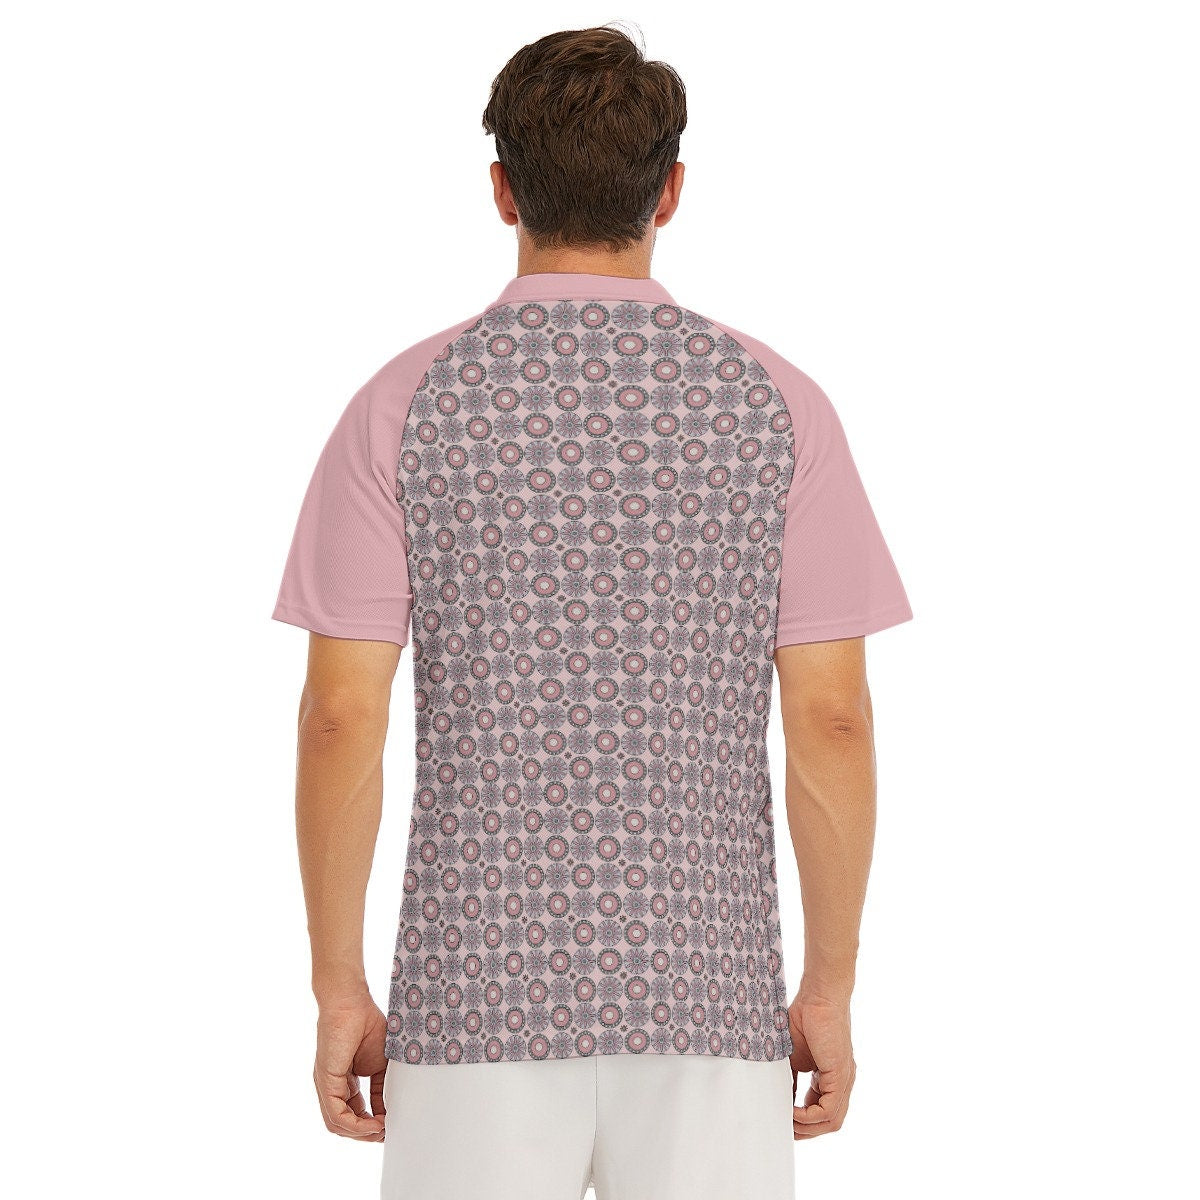 Polo Shirt, Vintage polo, Men's polo shirt, Pink polo shirt, 60s shirt men, Mod shirt,Men's vintage shirt,vintage style shirt,plus size men